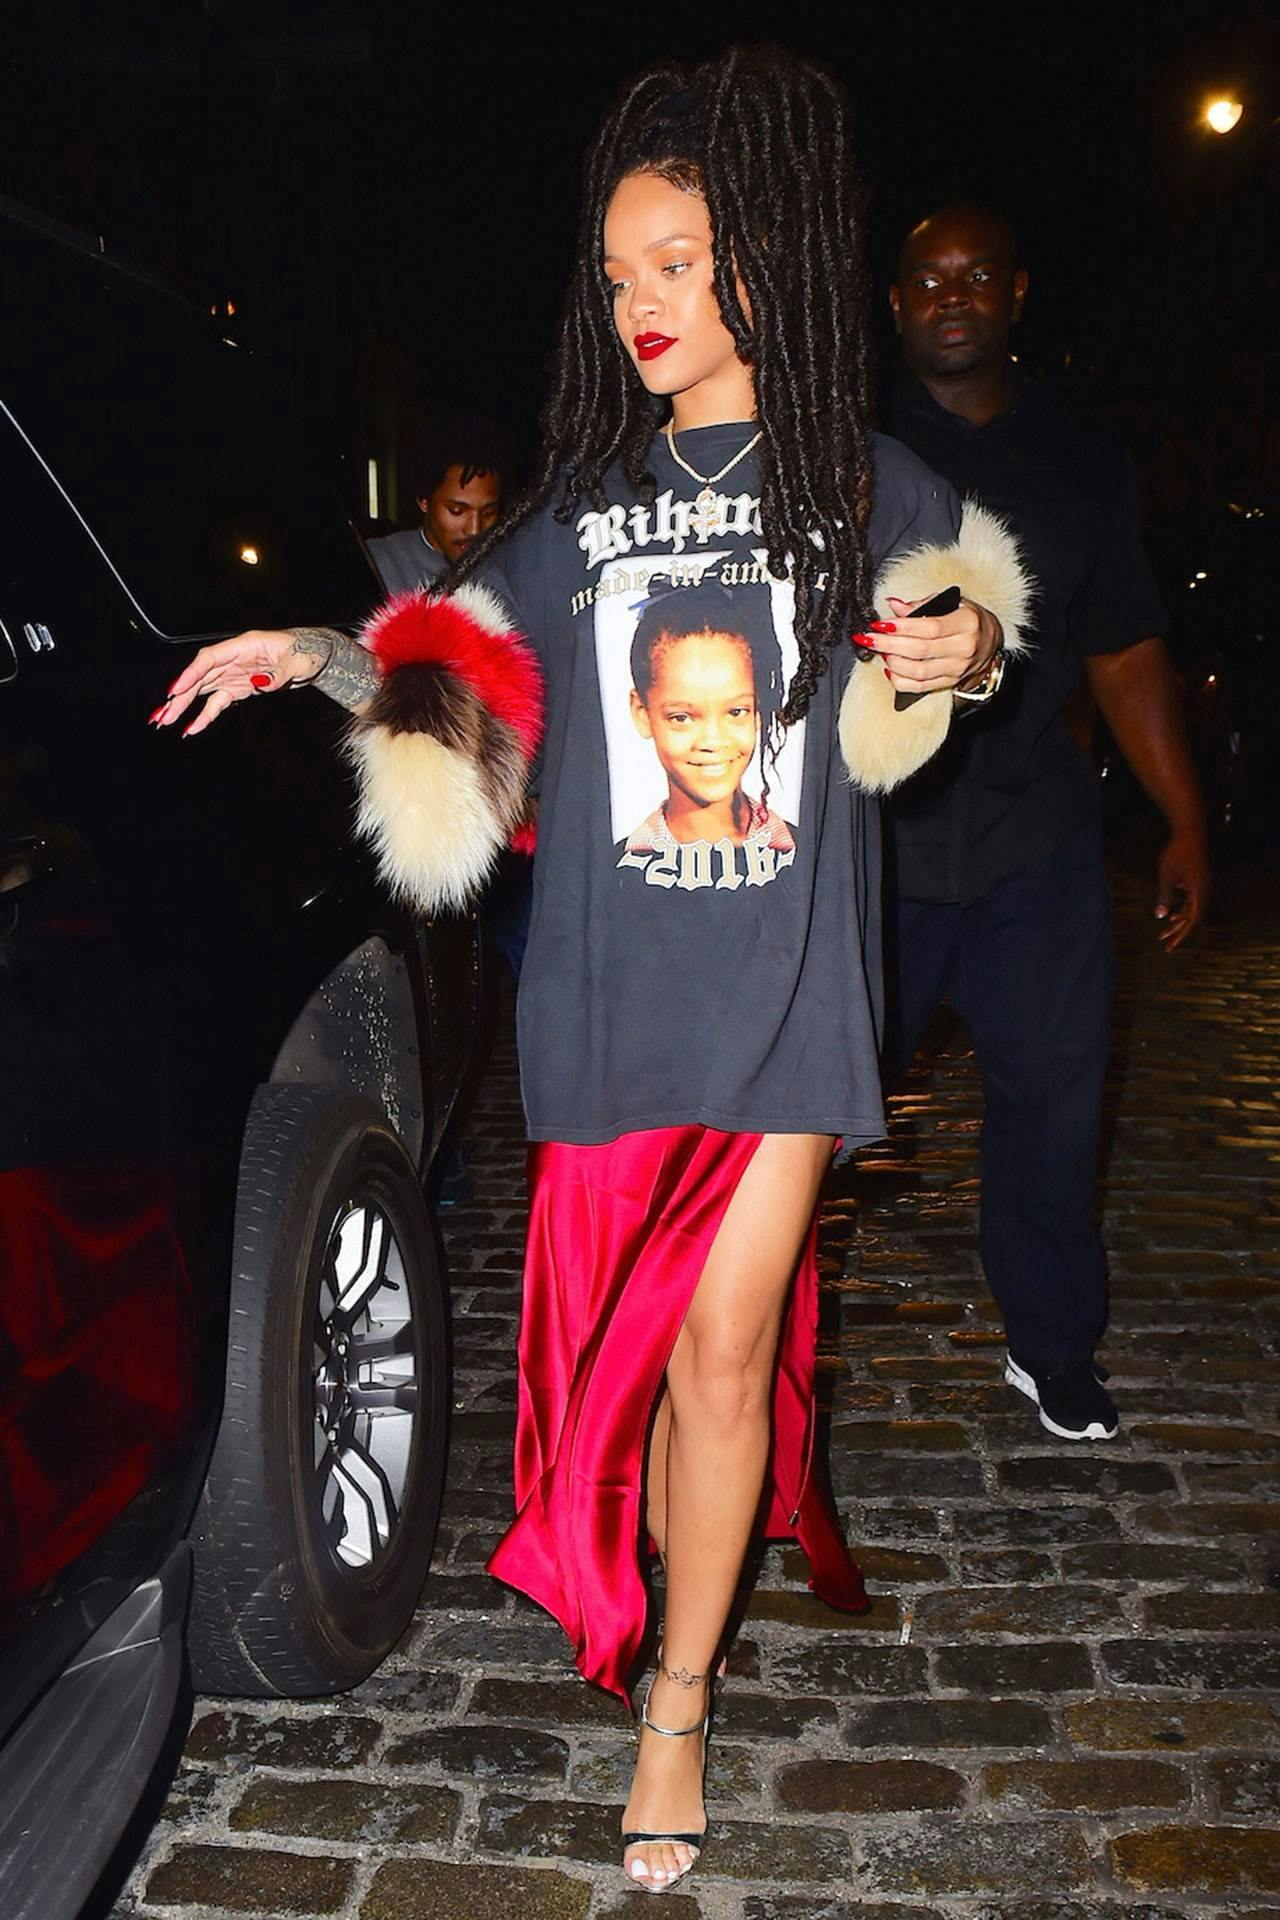 Telemacos Onvoorziene omstandigheden Bevestigen How to Style Band Tees, According to Celebrities - Concert T-Shirt Merch  Rihanna